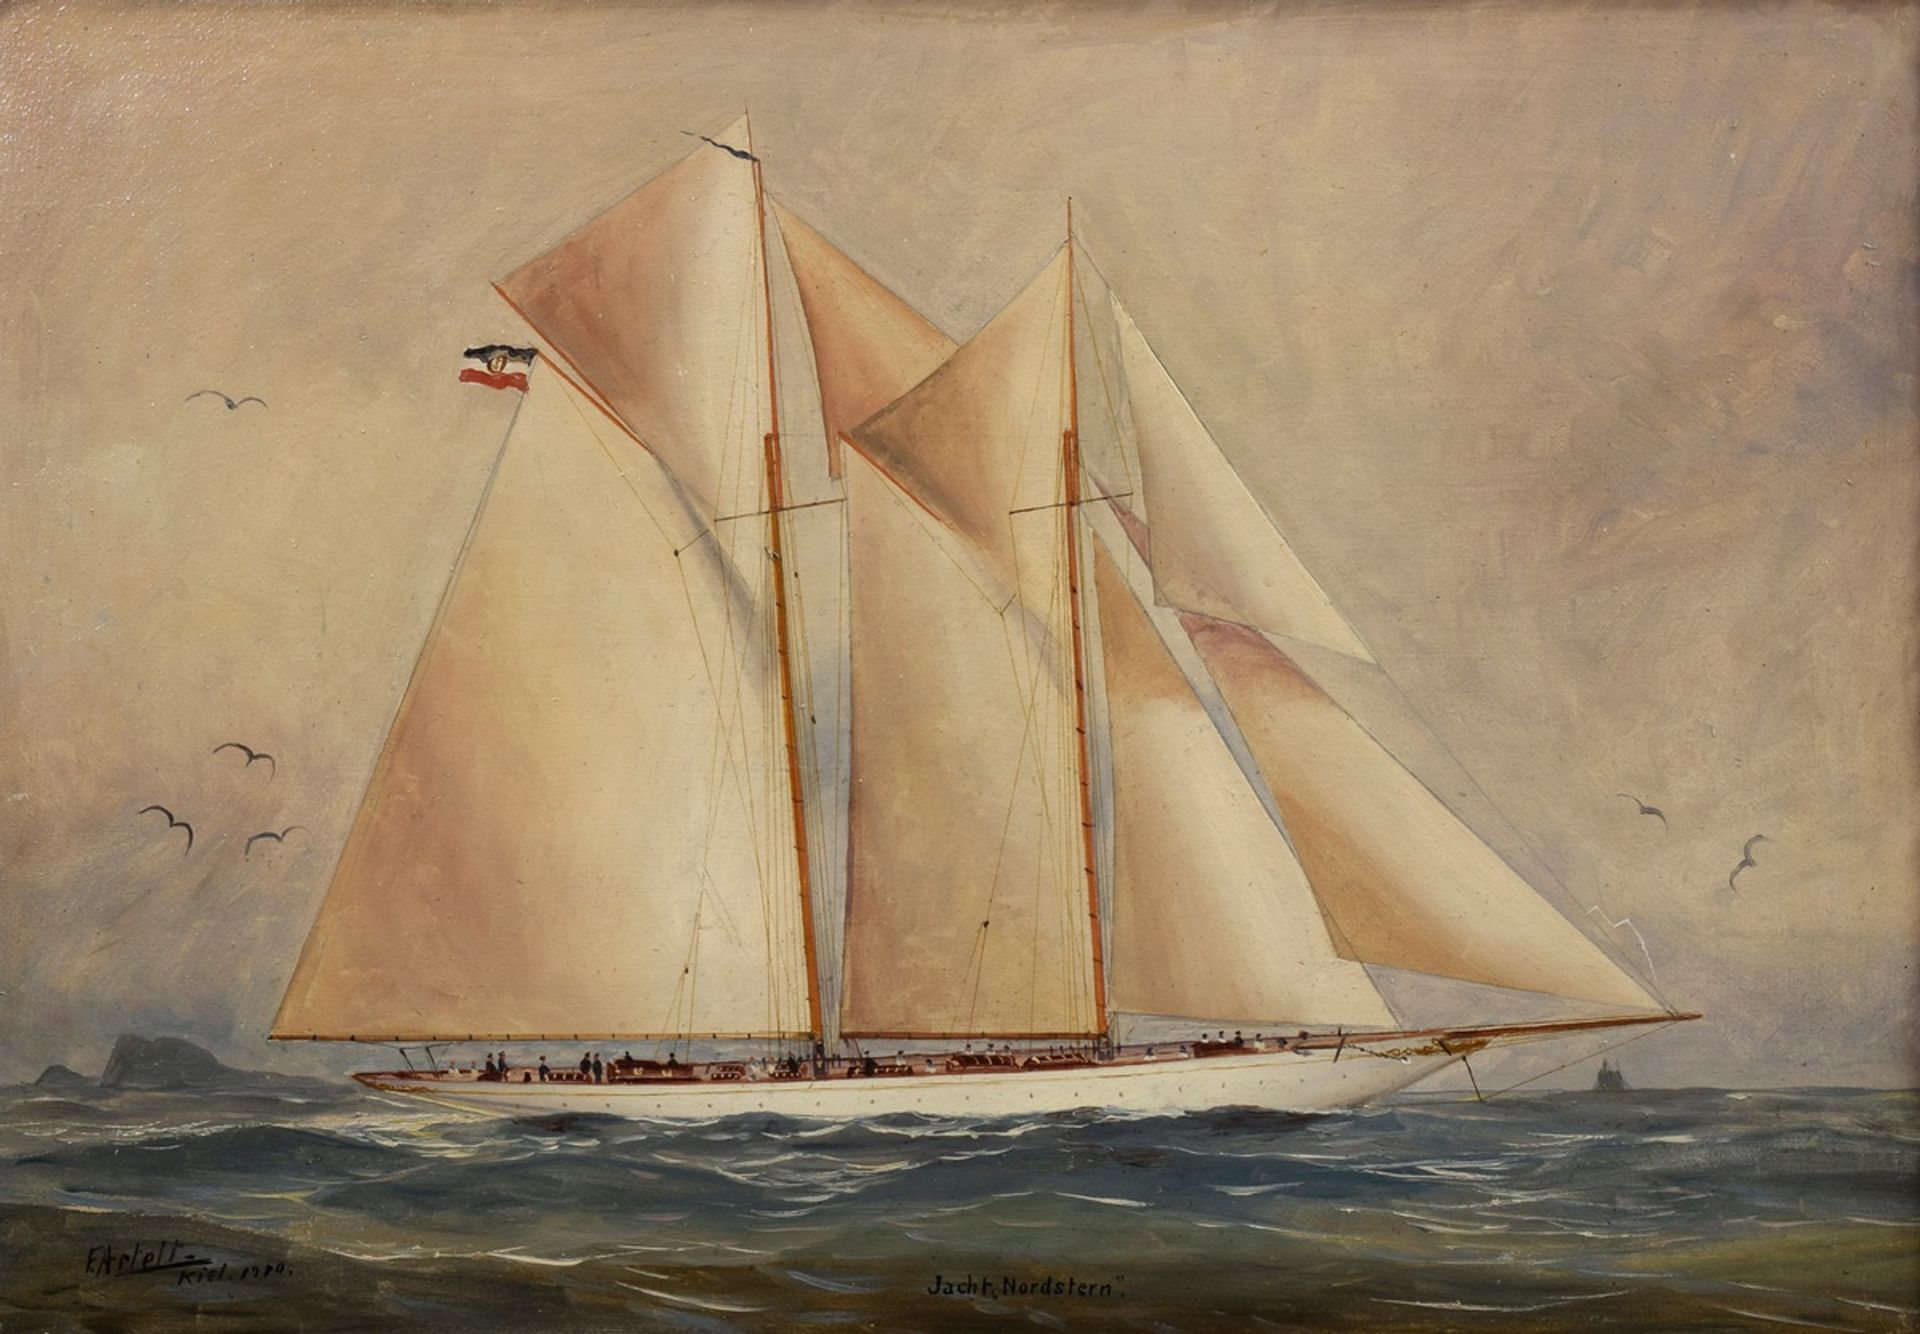 Artelt, E. "Kapitänsbild Jacht 'Nordstern'" 1910 | Artelt, E. "Captains picture yacht 'Nordstern'"